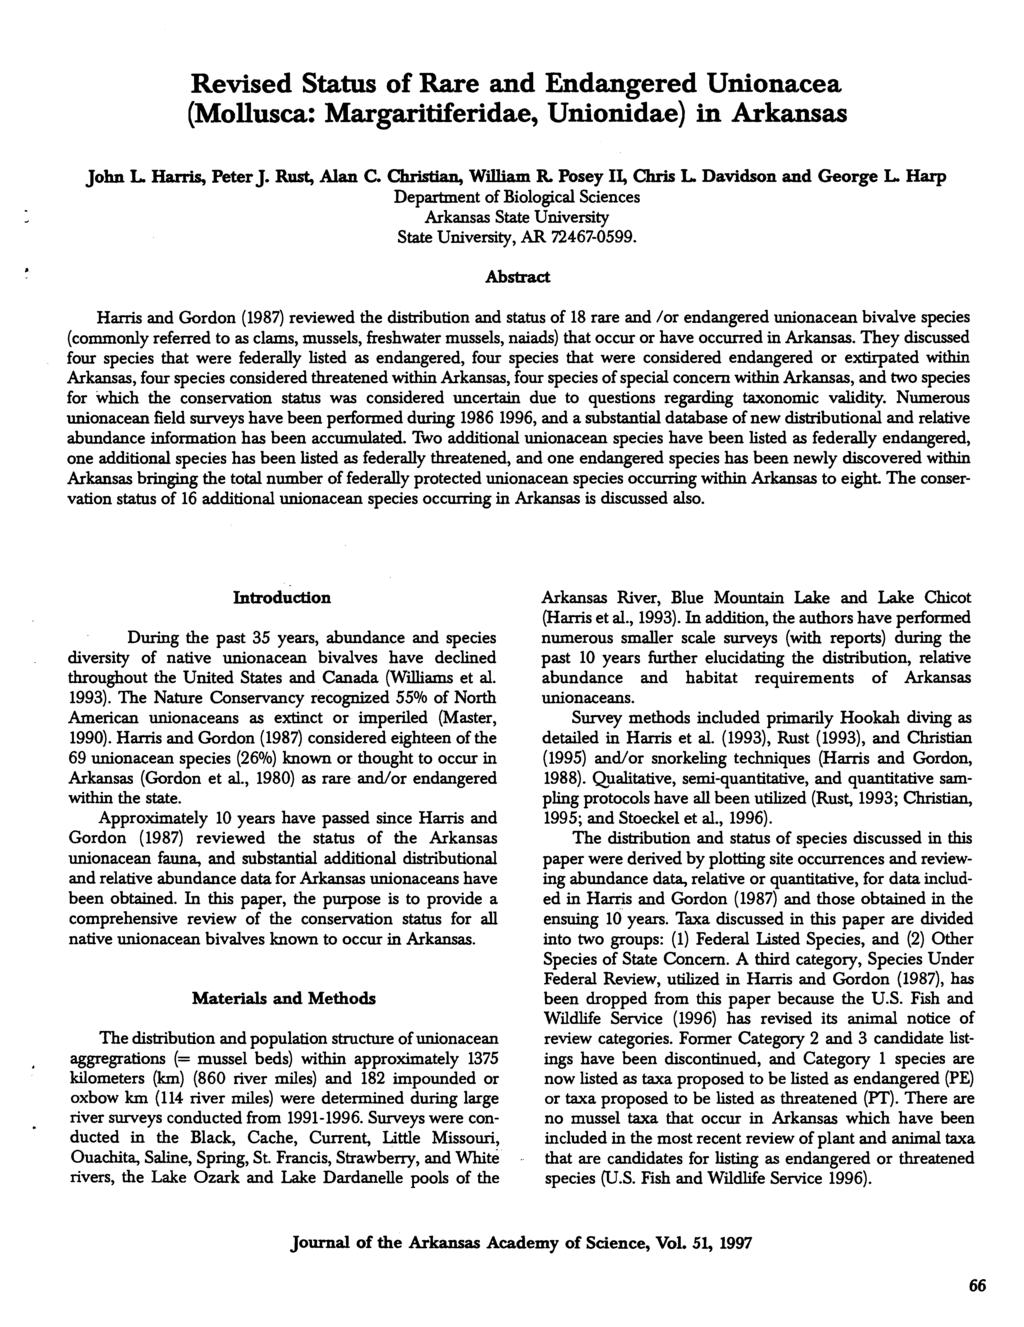 Revised Status of Rare and Endangered Unionacea (Mollusca: Margaritiferidae, Unionidae) in Arkansas John L Harris,Peter J. Rust, Alan C. Quistian, William R Posey II, Chris L.Davidson and George L.